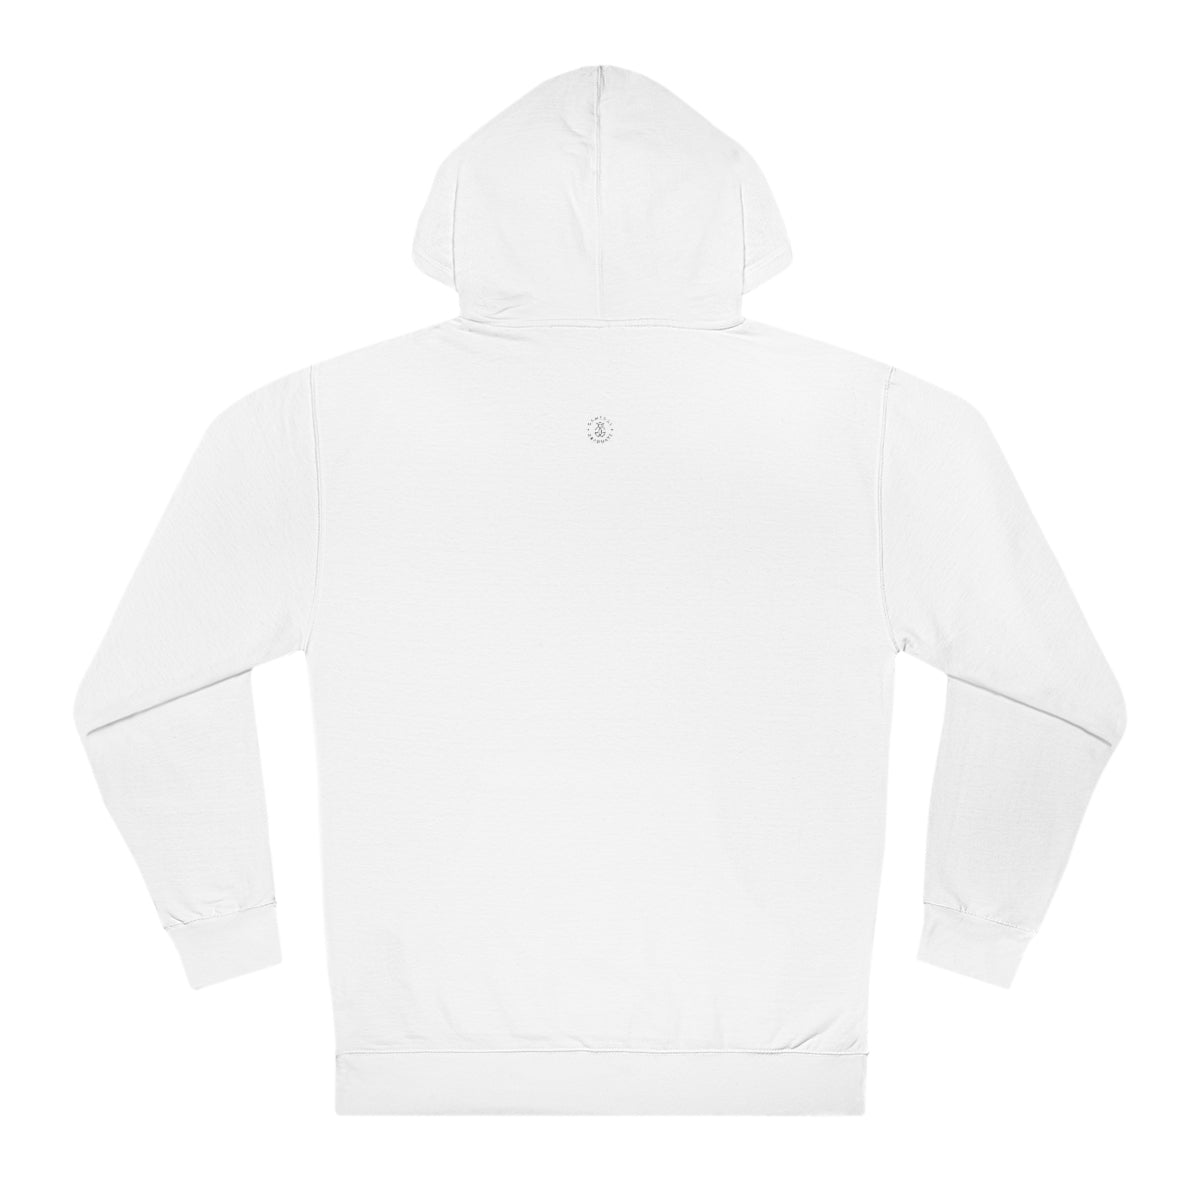 Arizona State Hooded Sweatshirt - GG - ITC